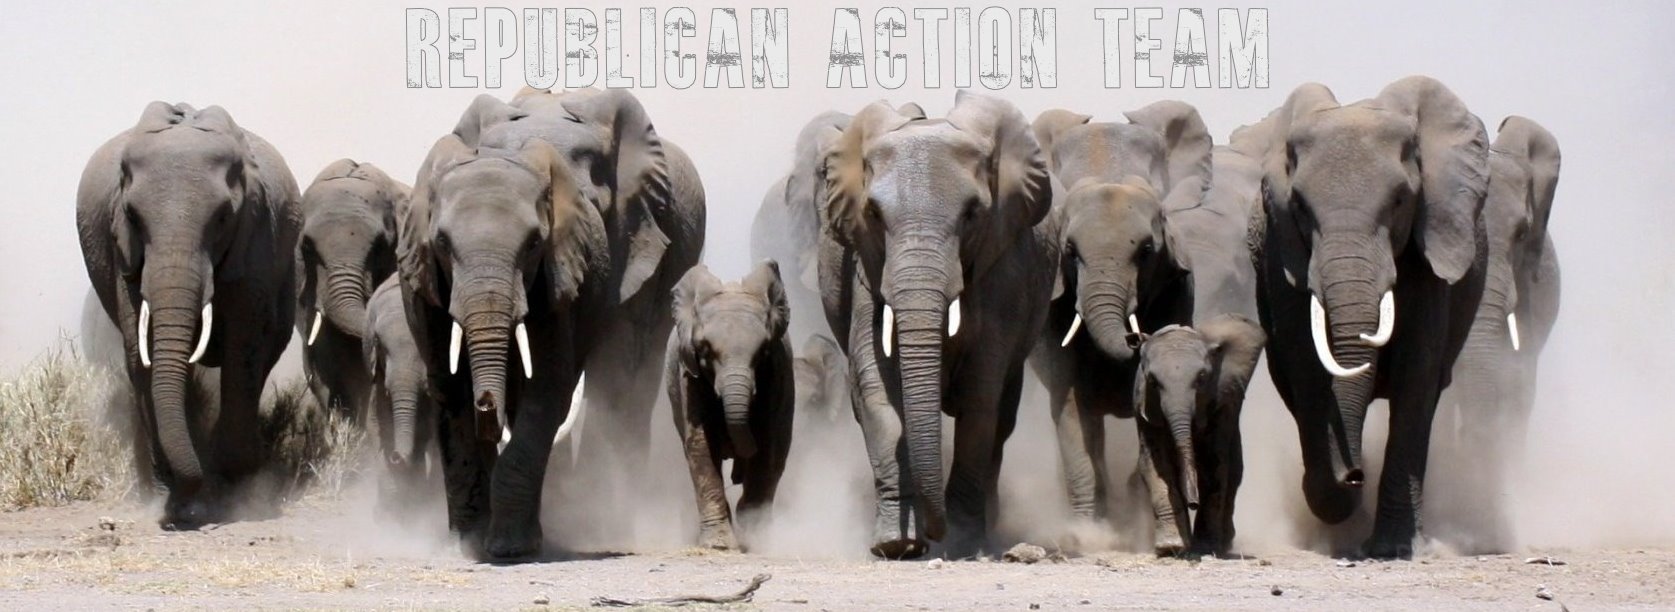 republican action team main-image